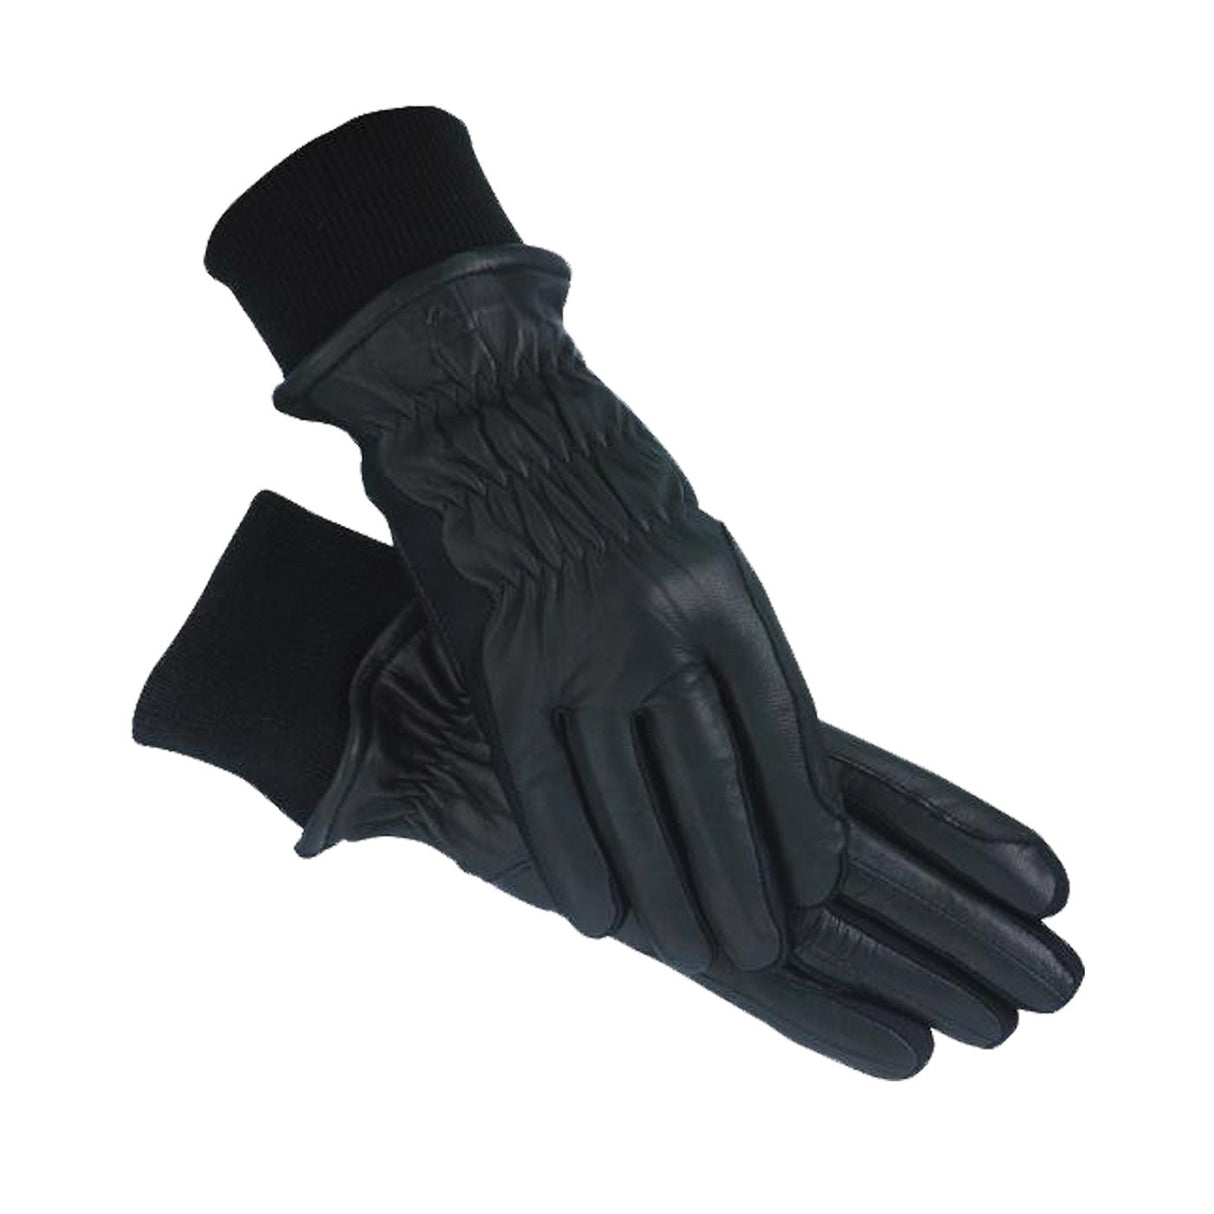 SSG 4300 Pro Show Winter Gloves